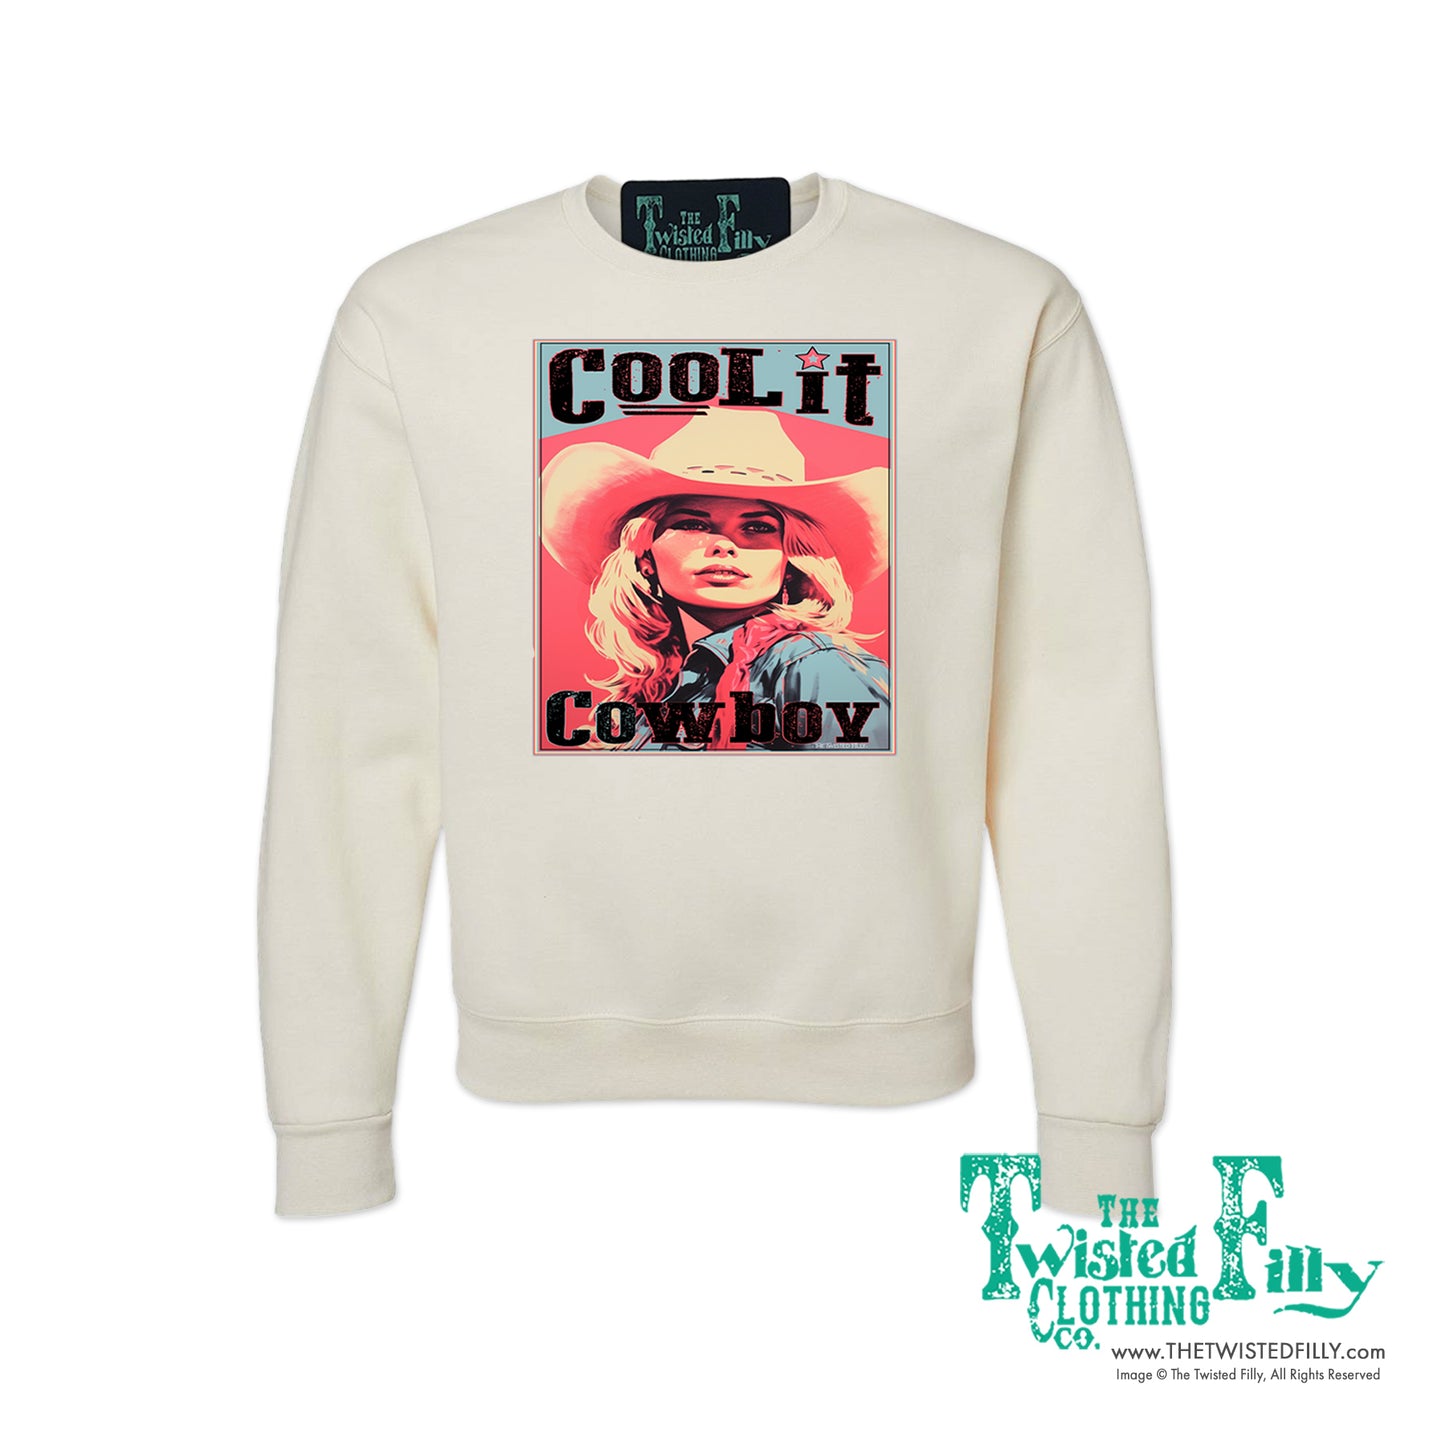 Cool It Cowboy - Adult Womens Sweatshirt - Assorted Colors